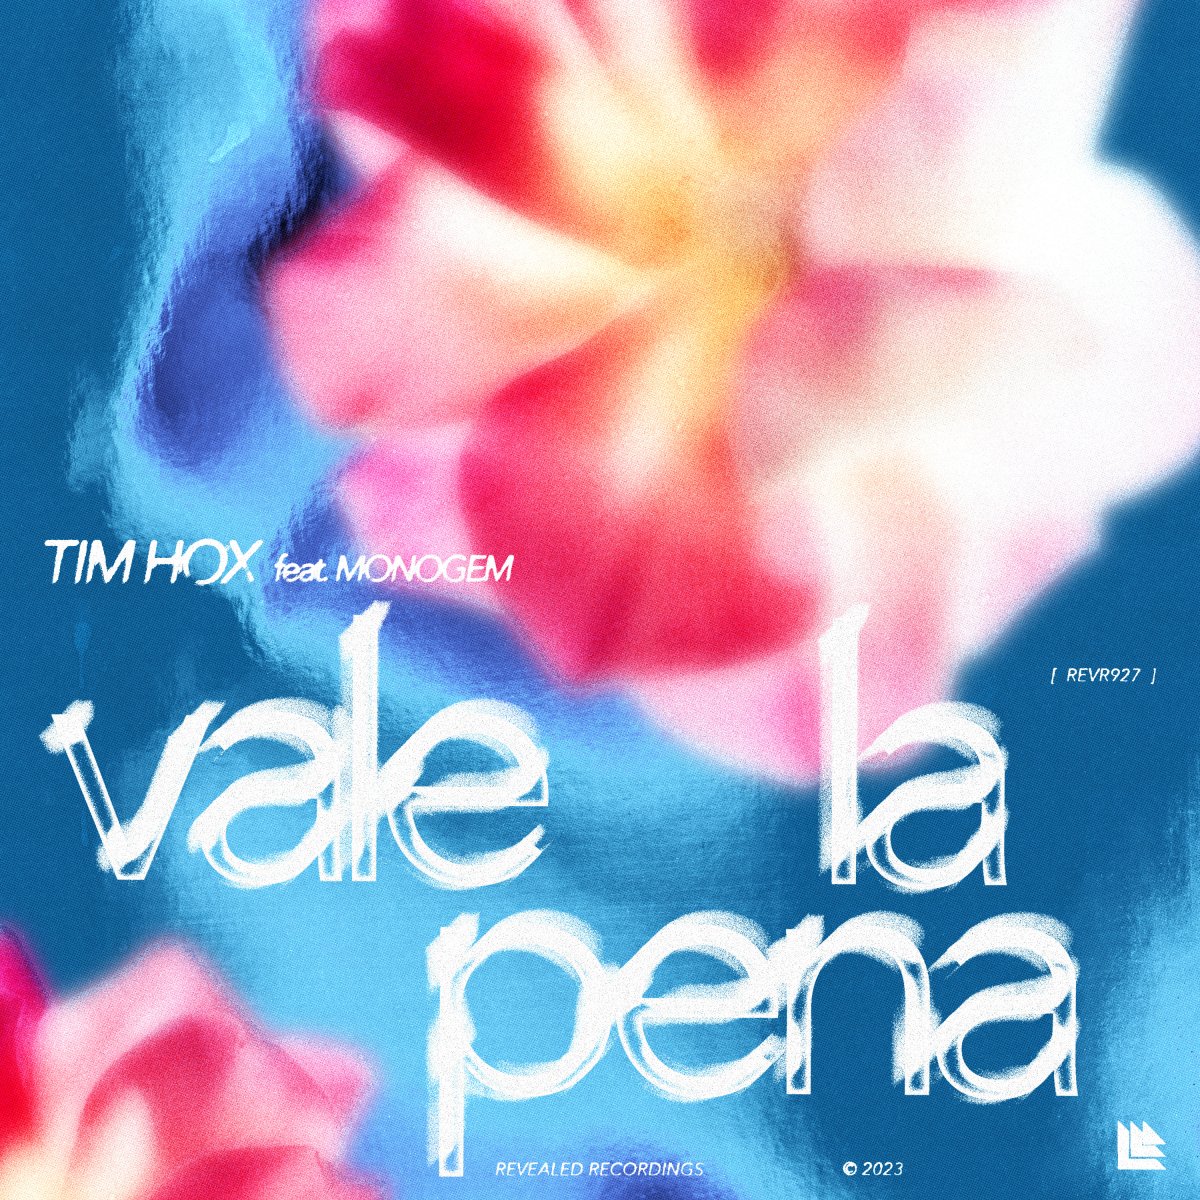 Vale La Pena - Tim Hox⁠ feat. MONOGEM⁠ 